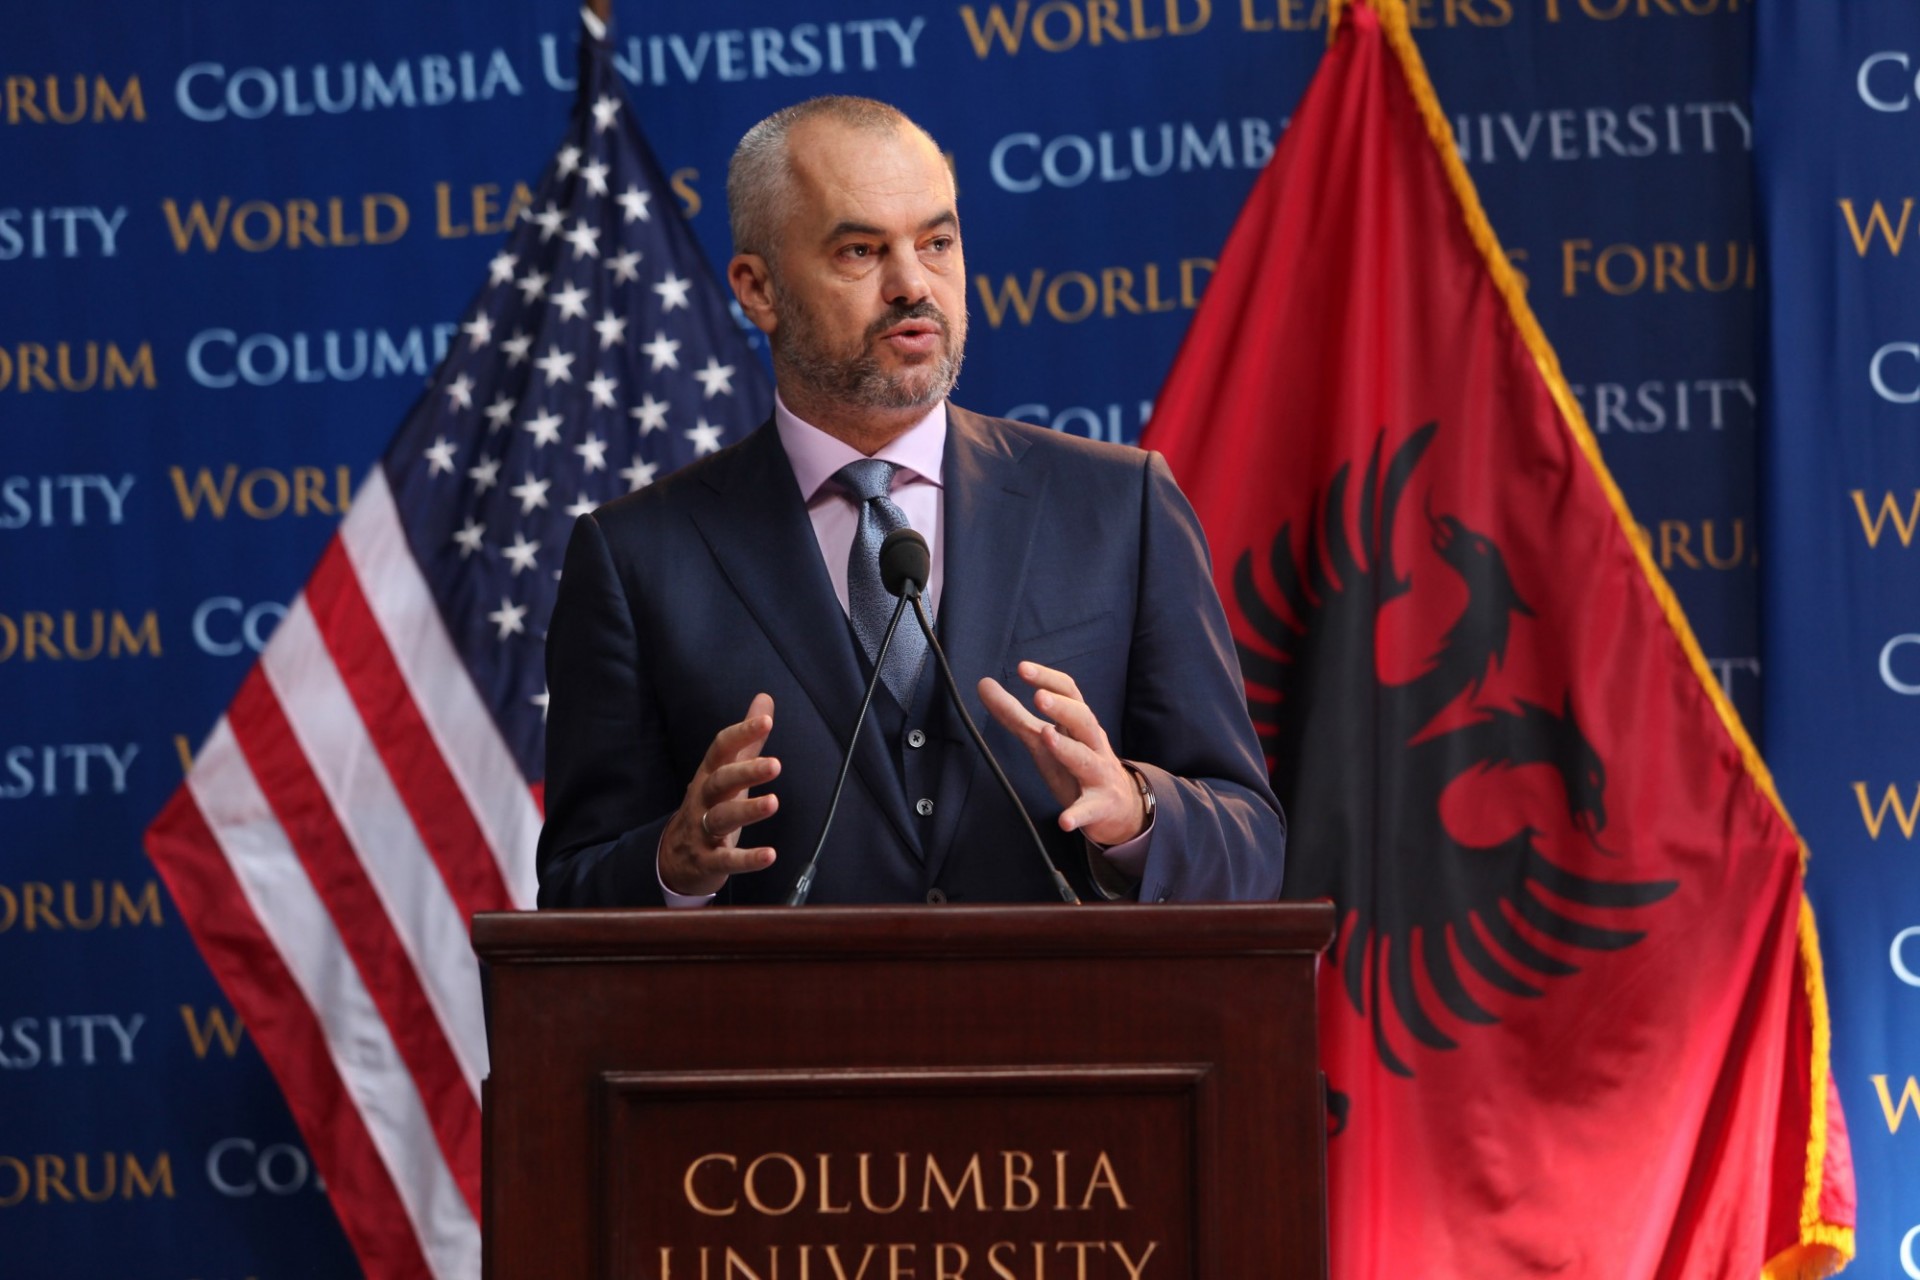 Prime Minster Edi Rama of the Republic of Albania